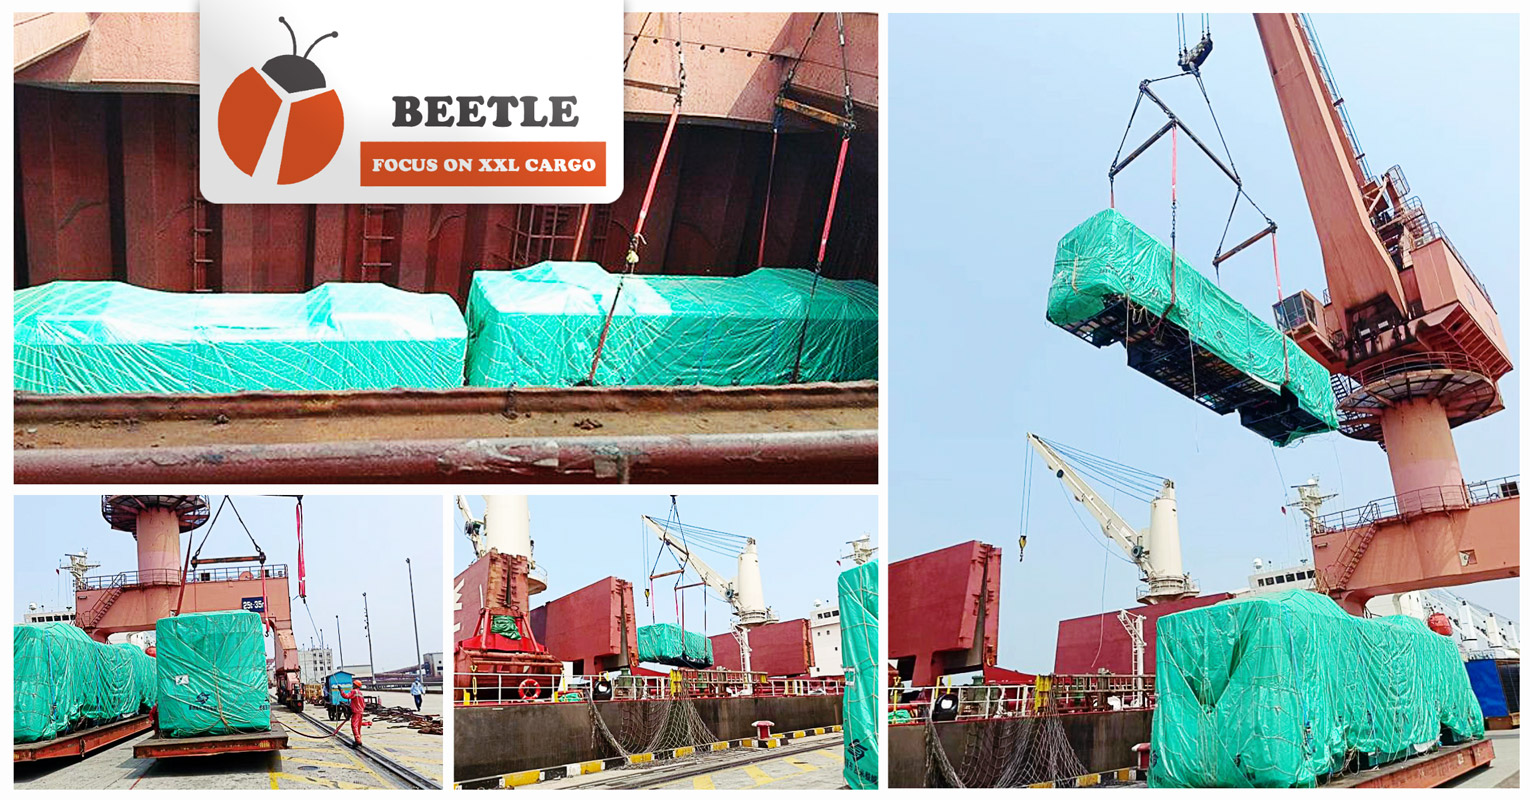 Shanghai Beetle Shipped 2 Buses by Break Bulk from Shanghai to Bandar Abbas